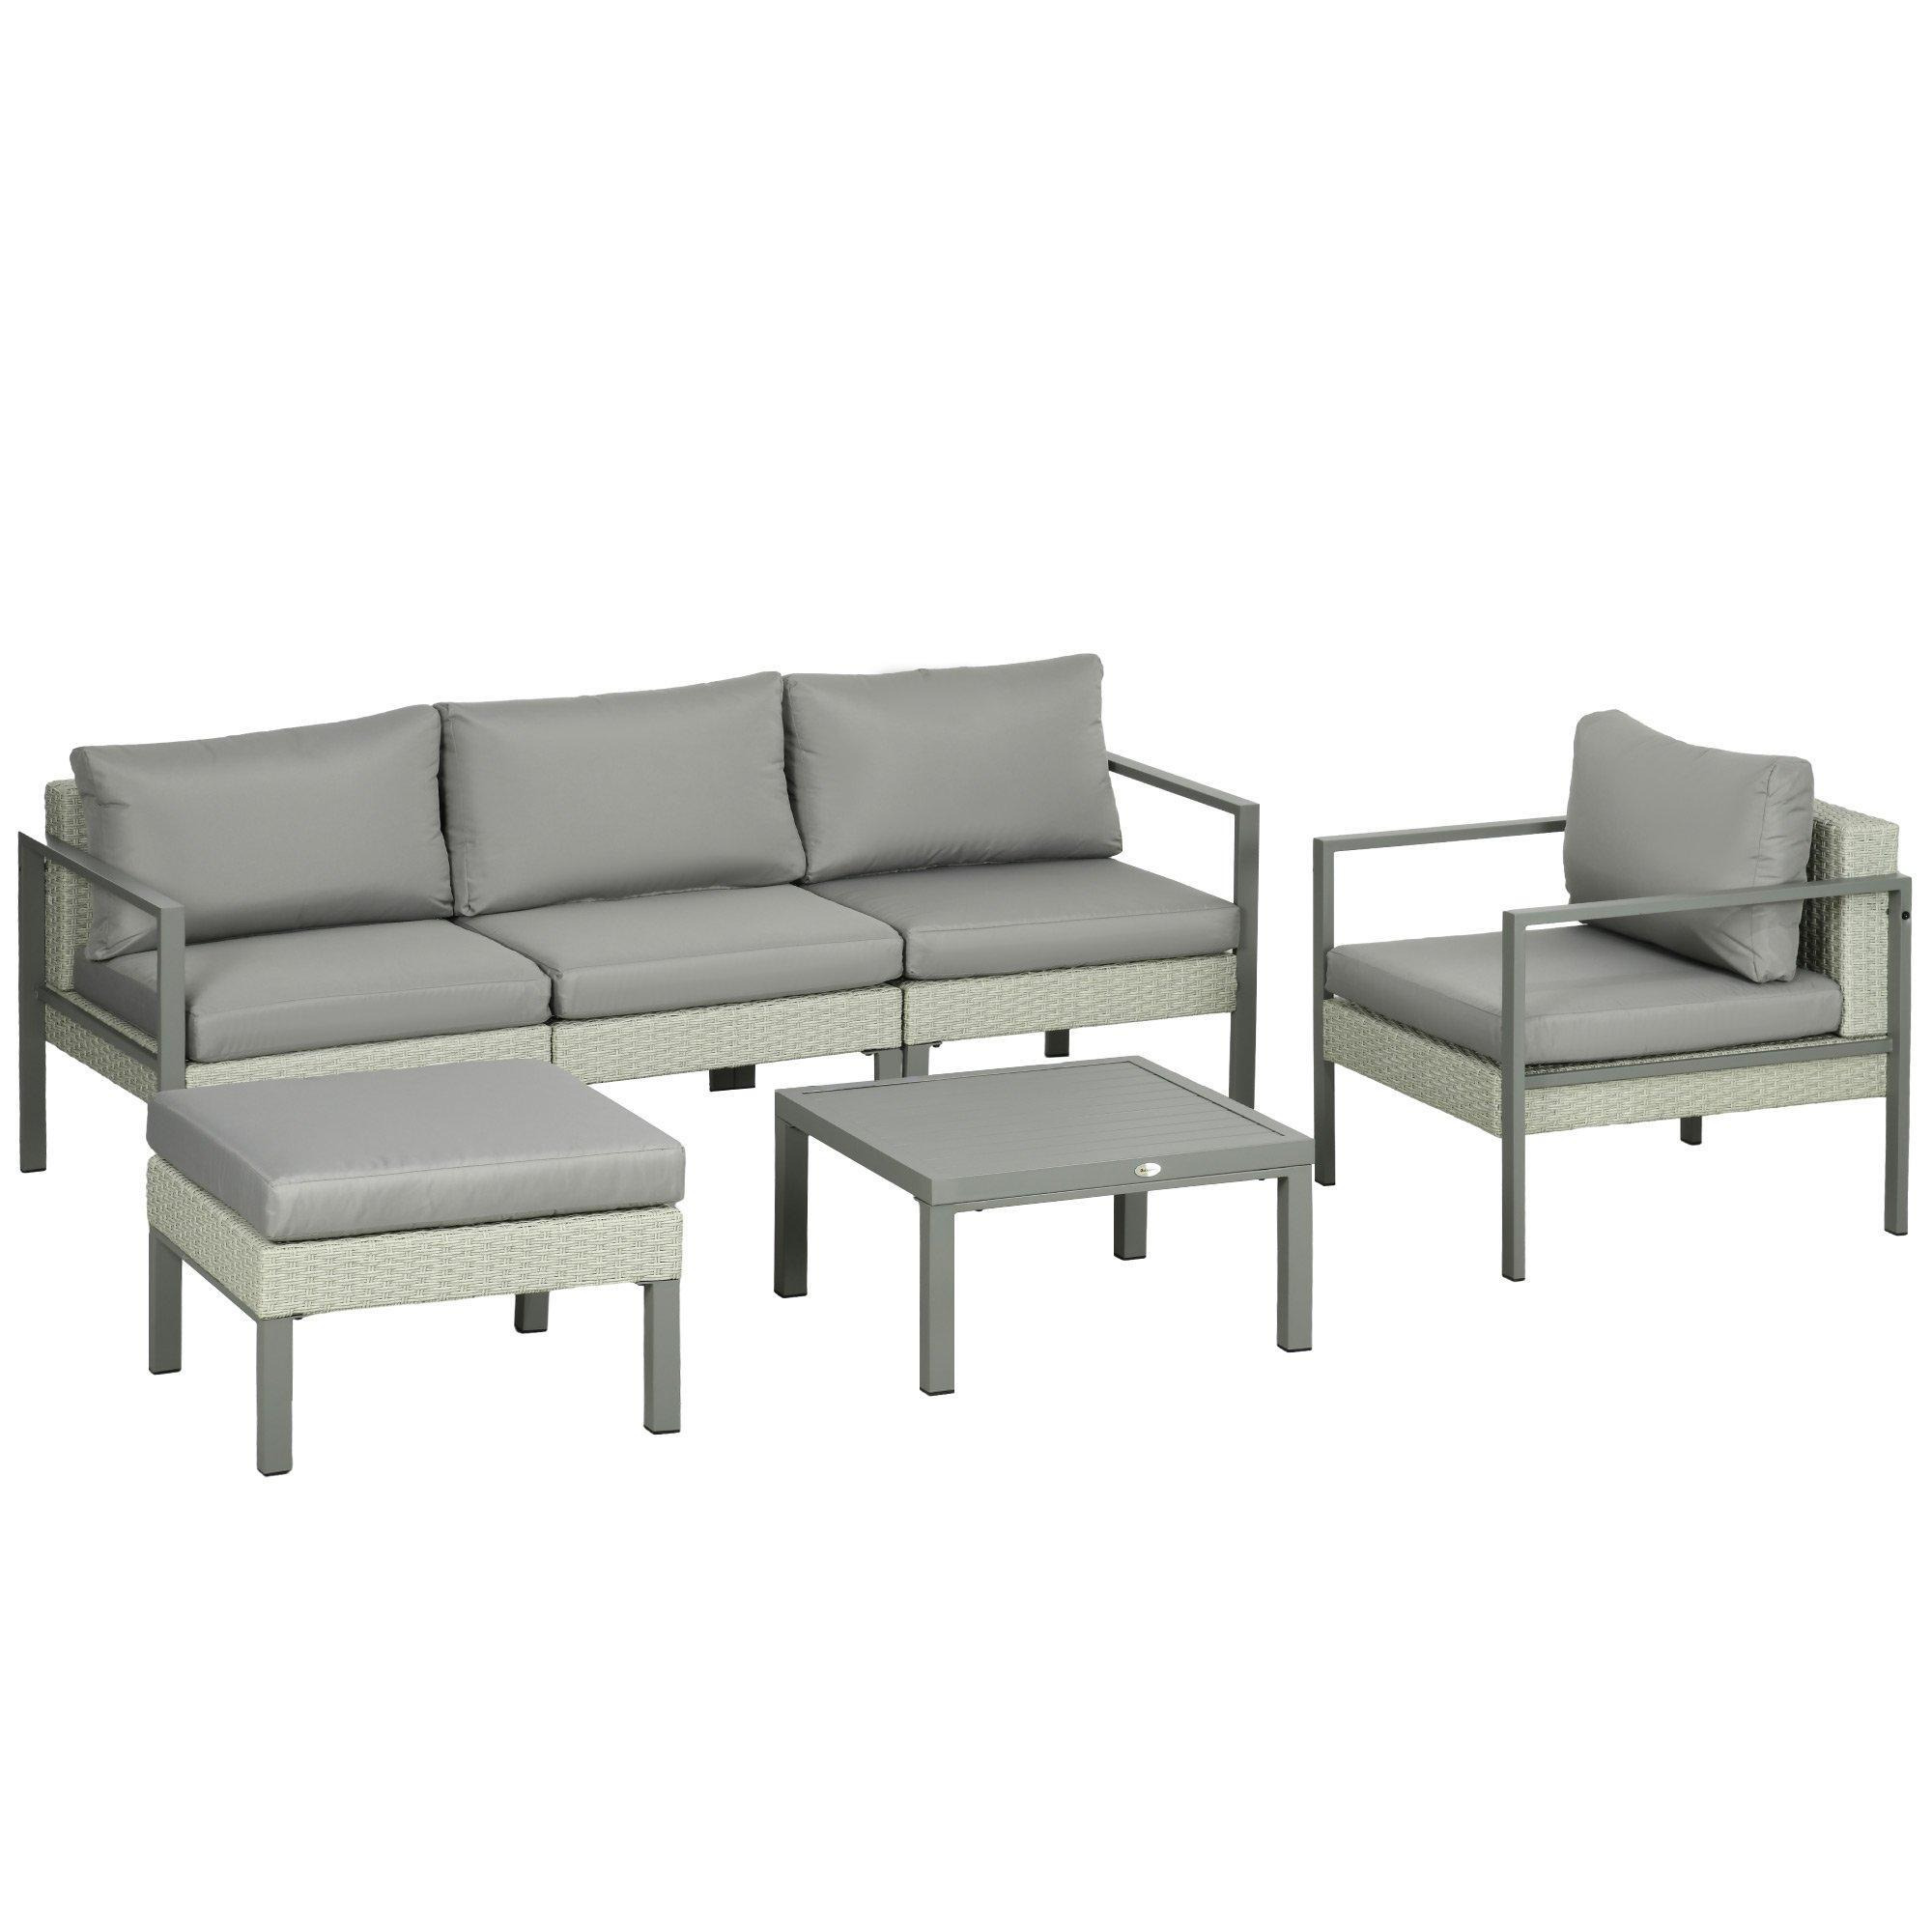 6 PCs Rattan Garden Furniture Set with Table, Cushion - image 1